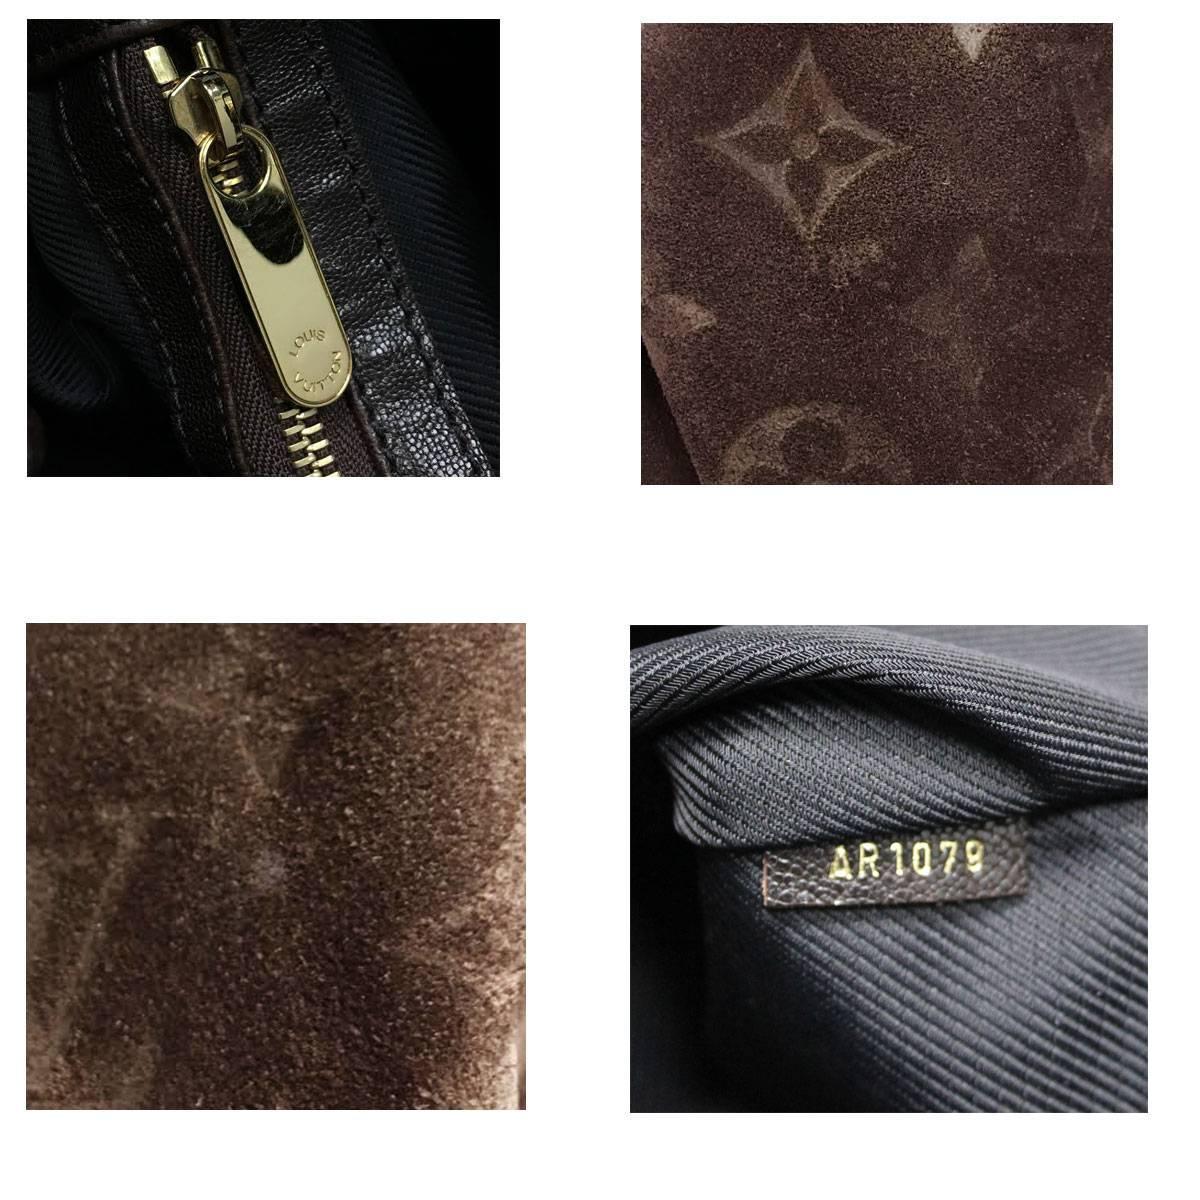 Black Louis Vuitton Irene Espresso Suede Patent Leather Limited Edition Large Handbag